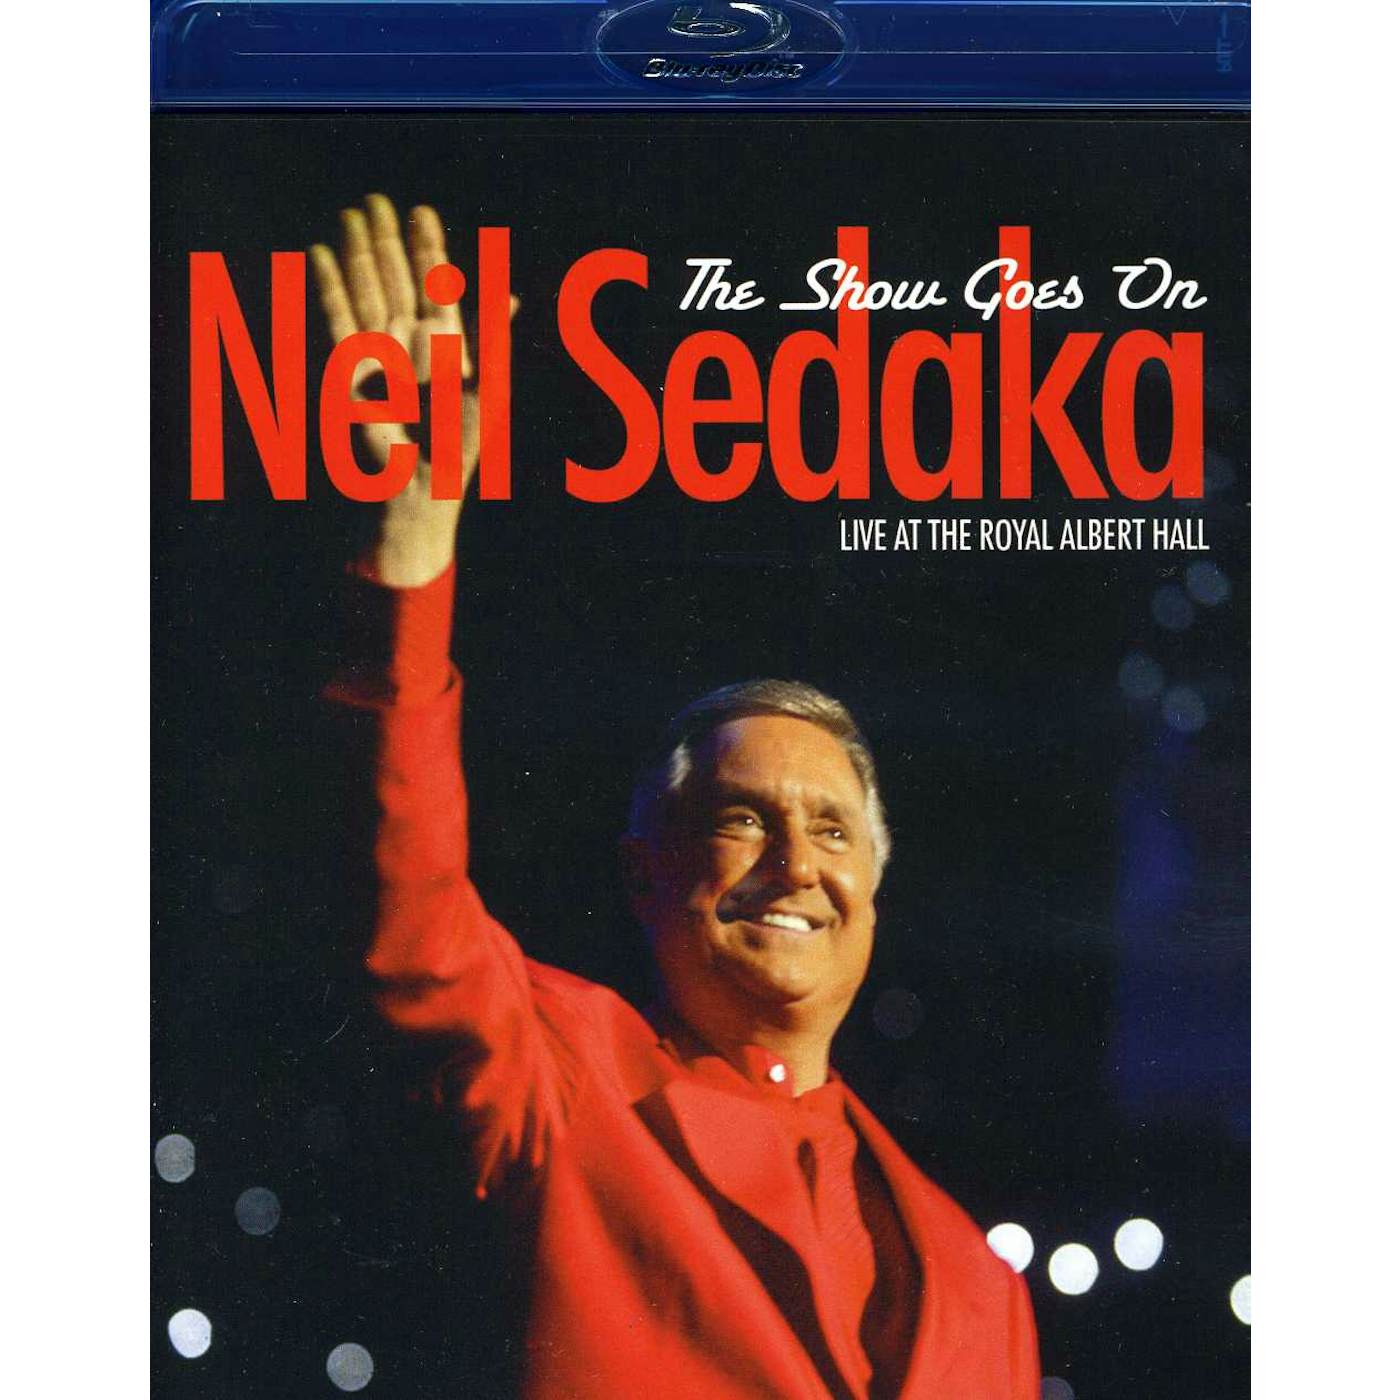 Neil Sedaka LIVE AT THE ROYAL ALBERT HALL Blu-ray